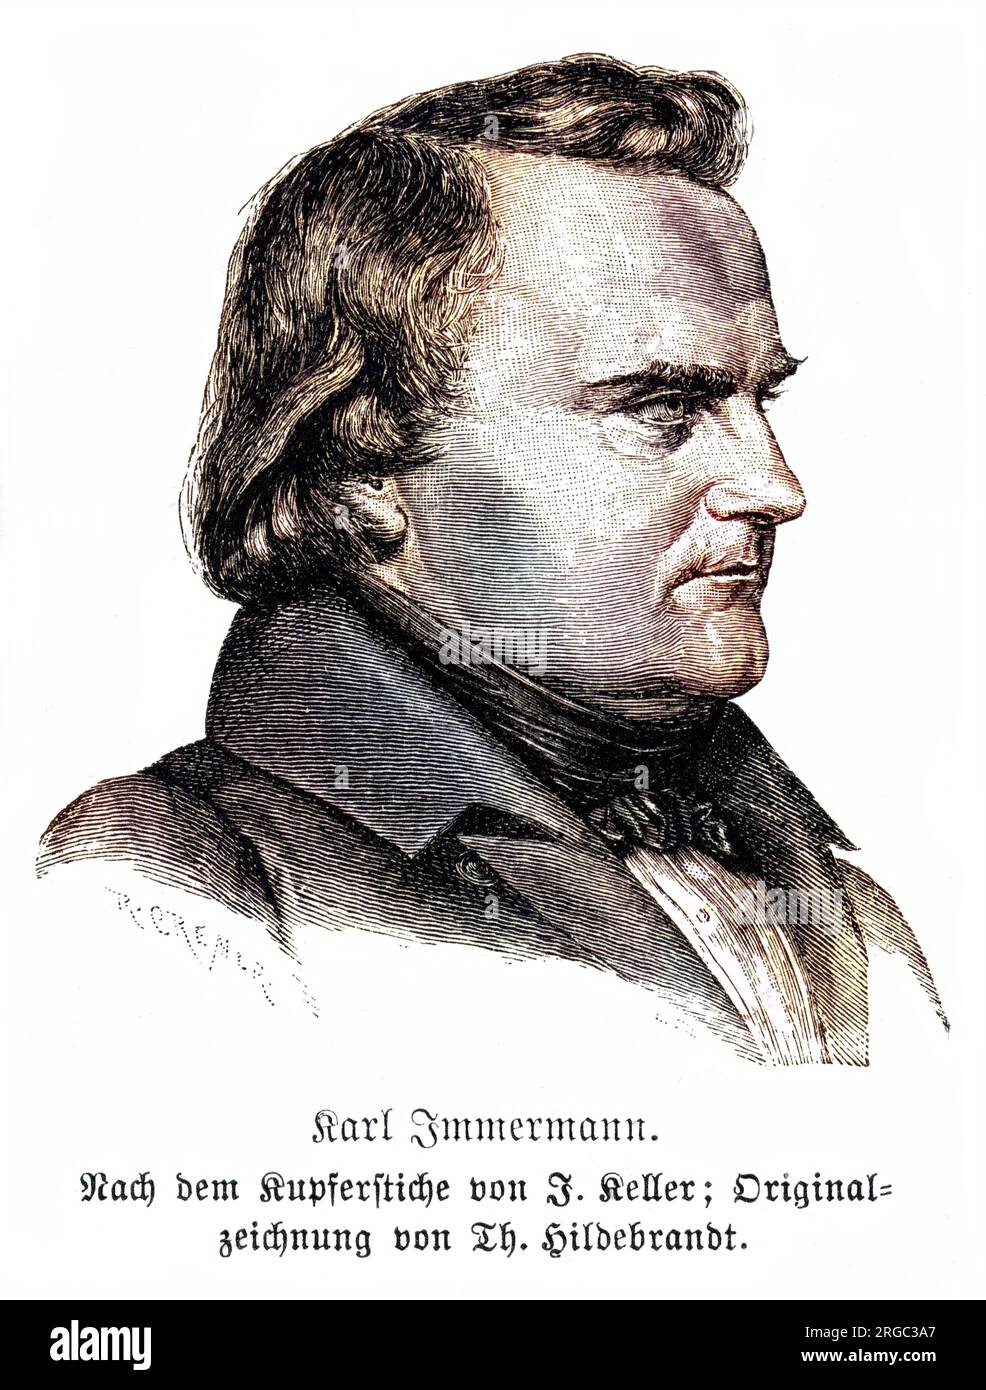 KARL LEBERECHT IMMERMANN (1796 - 1840), German writer. Stock Photo